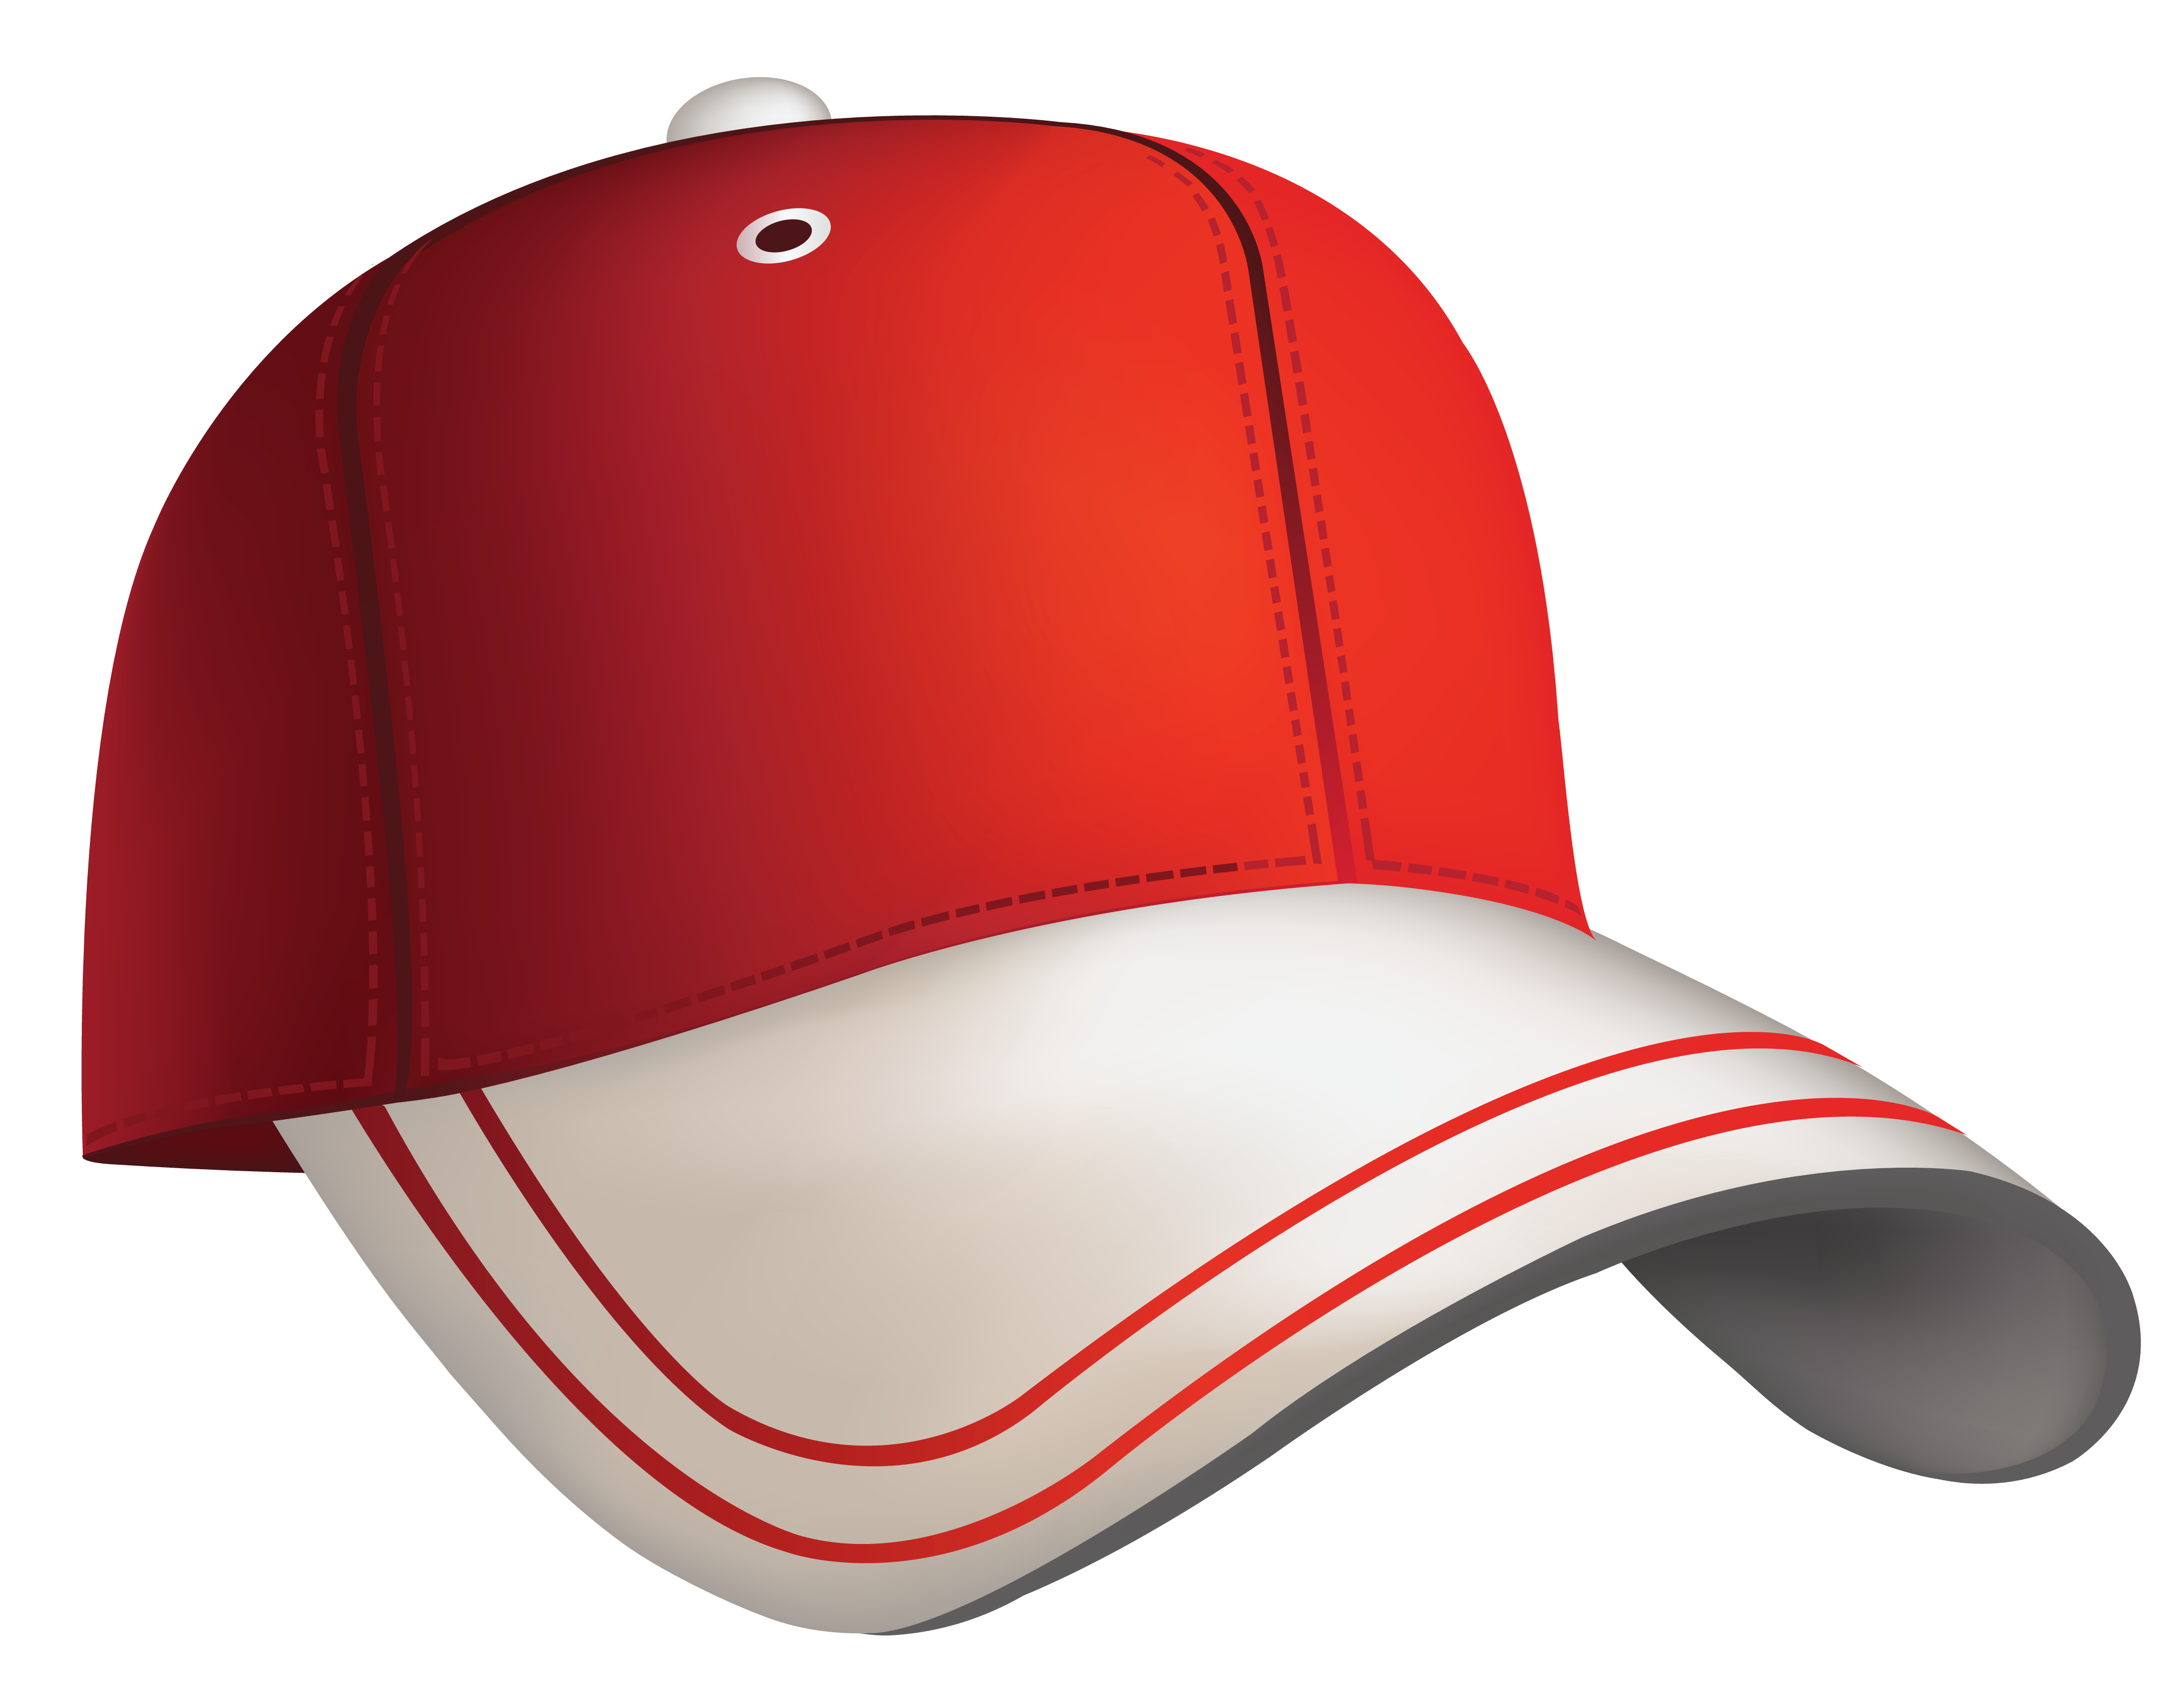 Download Png Image Baseball Cap Png Image